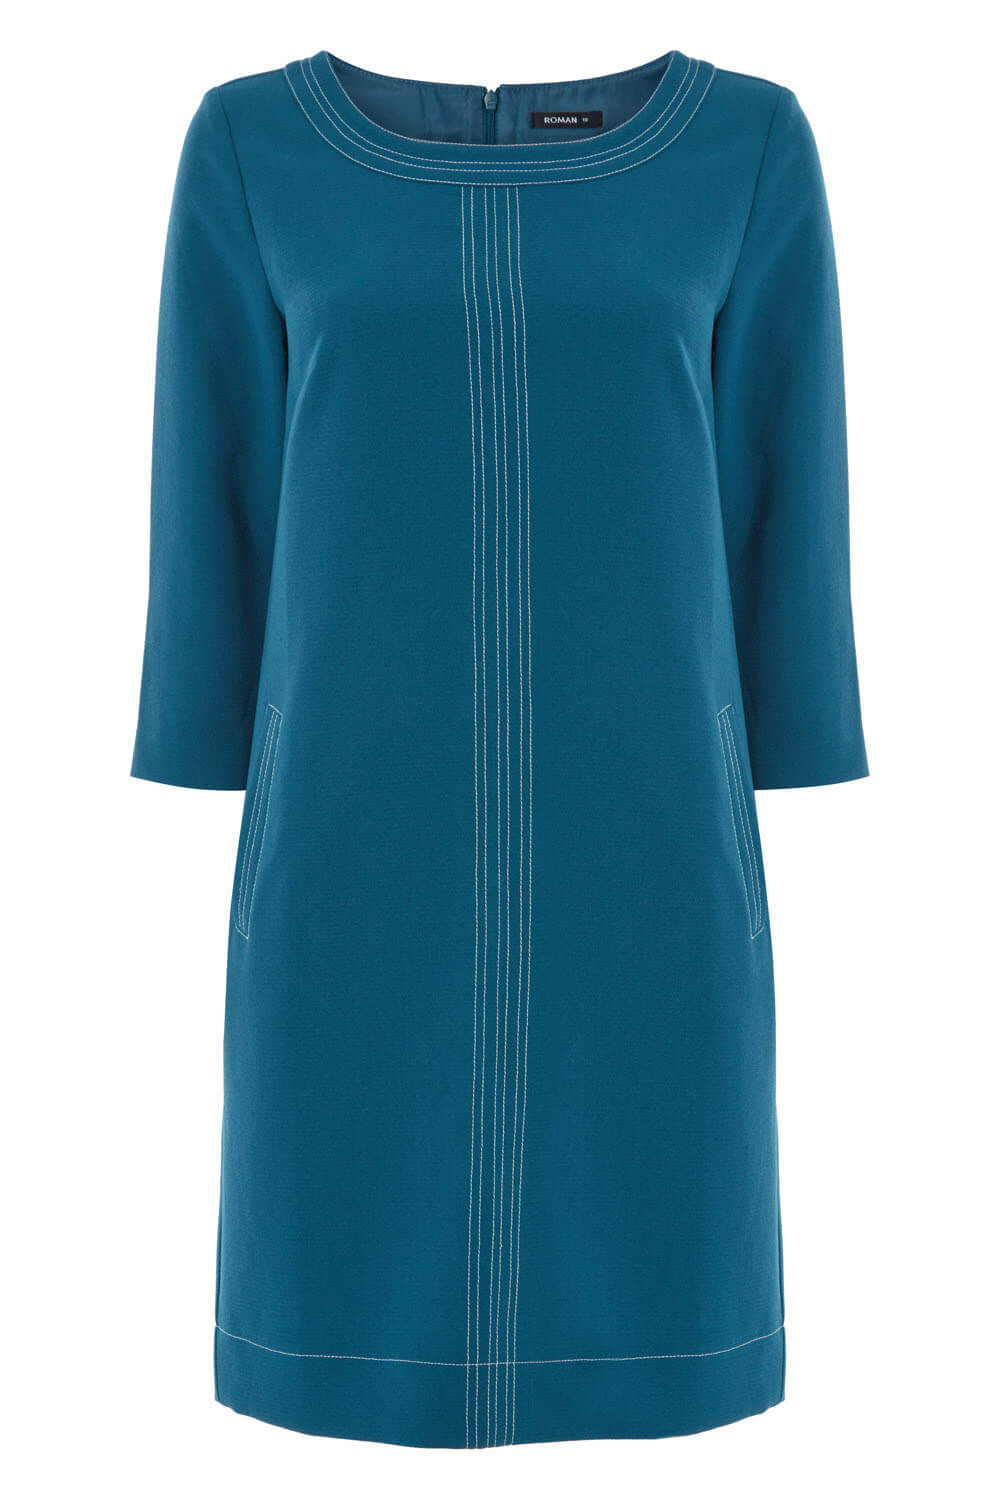 Blue 3/4 Sleeve Top Stitch Shift Dress, Image 4 of 4